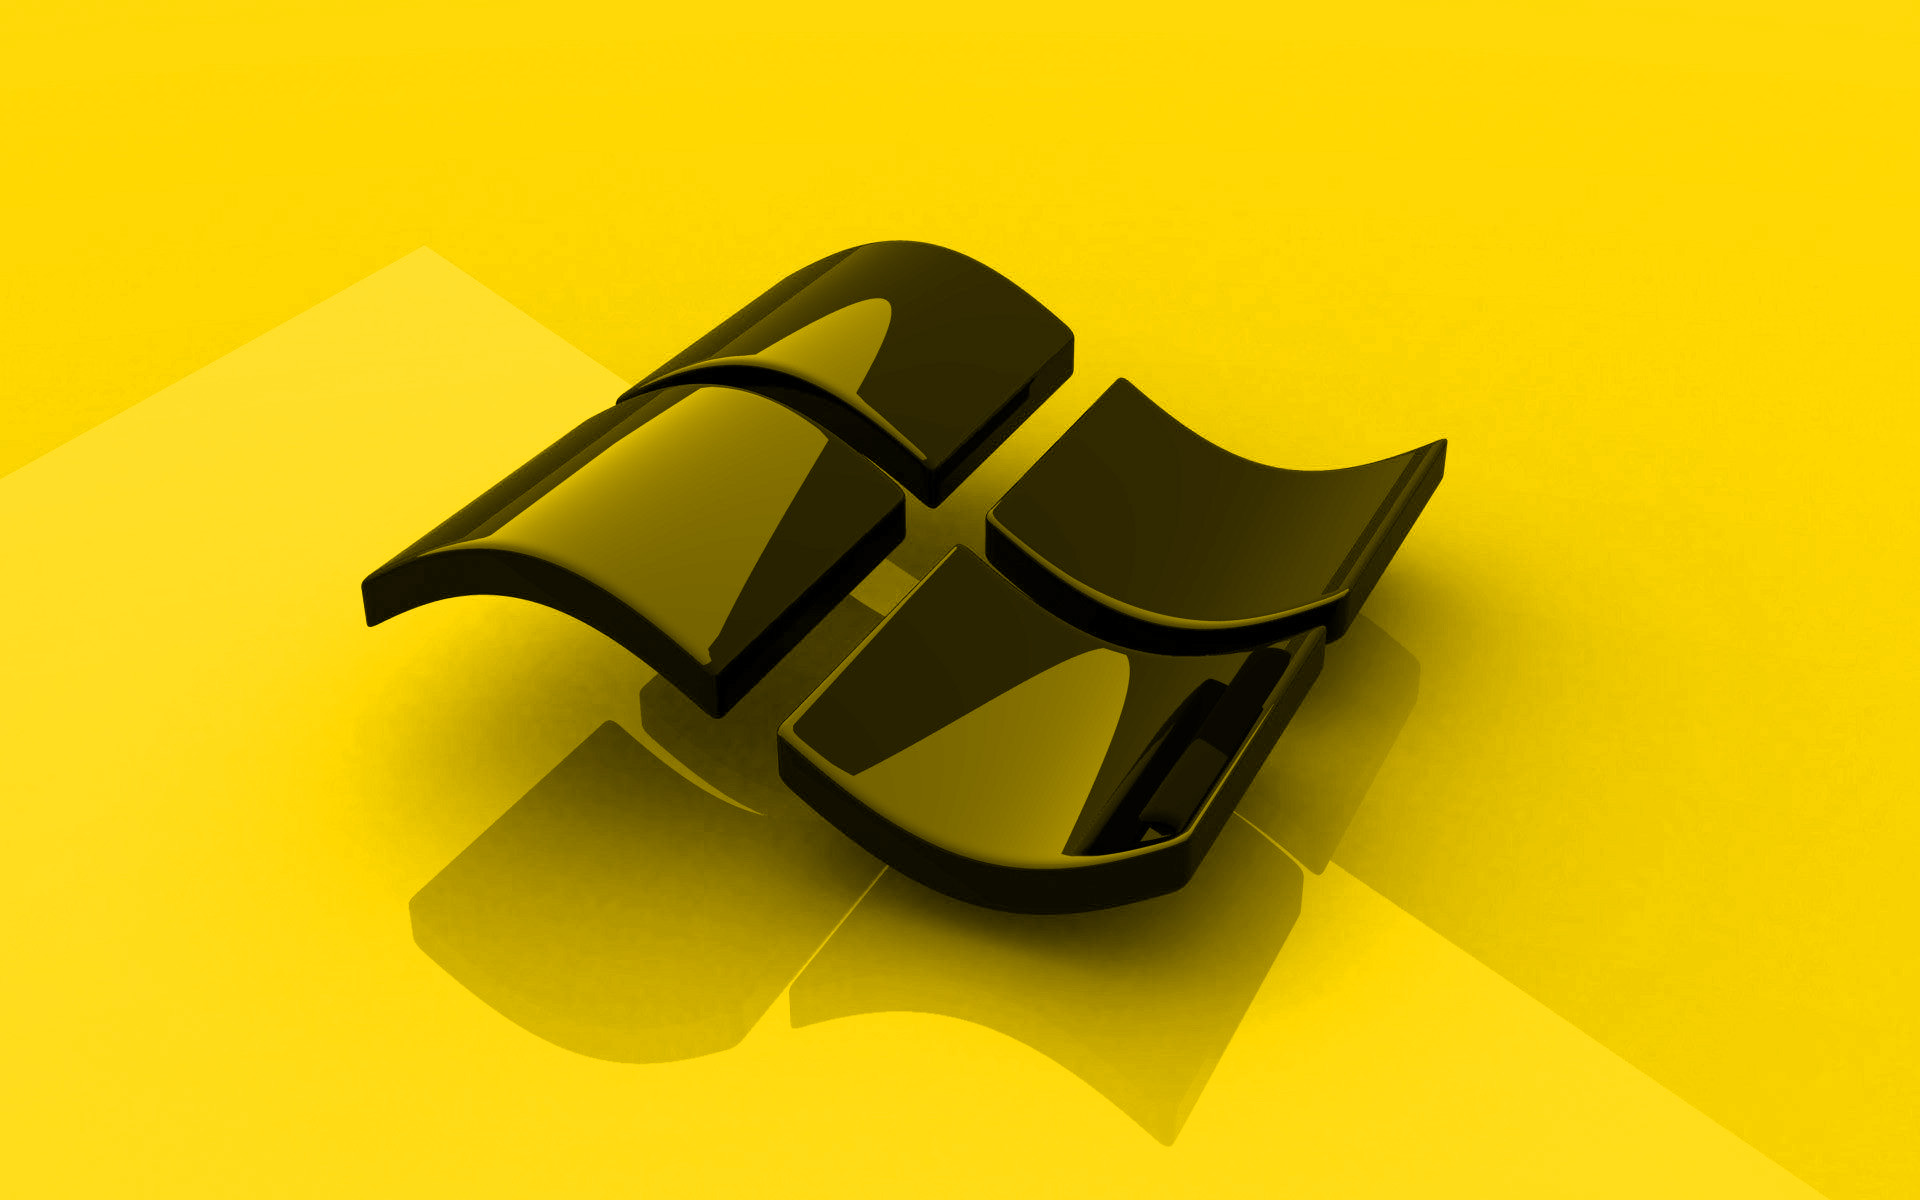 Download wallpaper Windows yellow logo, 3D art, OS, yellow background, Windows 3D logo, Windows, creative, Windows logo for desktop with resolution 1920x1200. High Quality HD picture wallpaper